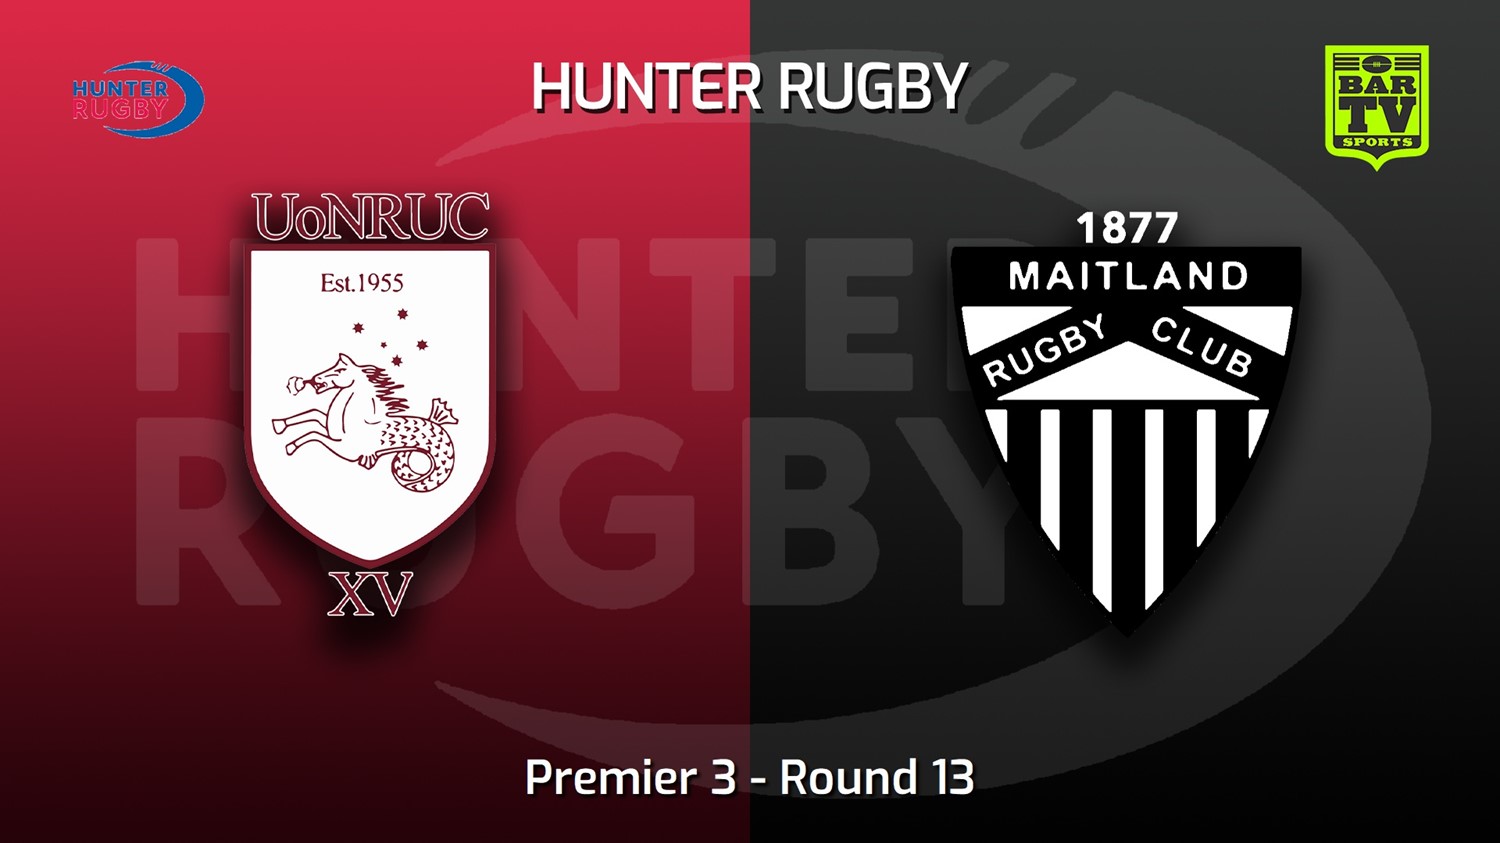 220721-Hunter Rugby Round 13 - Premier 3 - University Of Newcastle v Maitland Slate Image